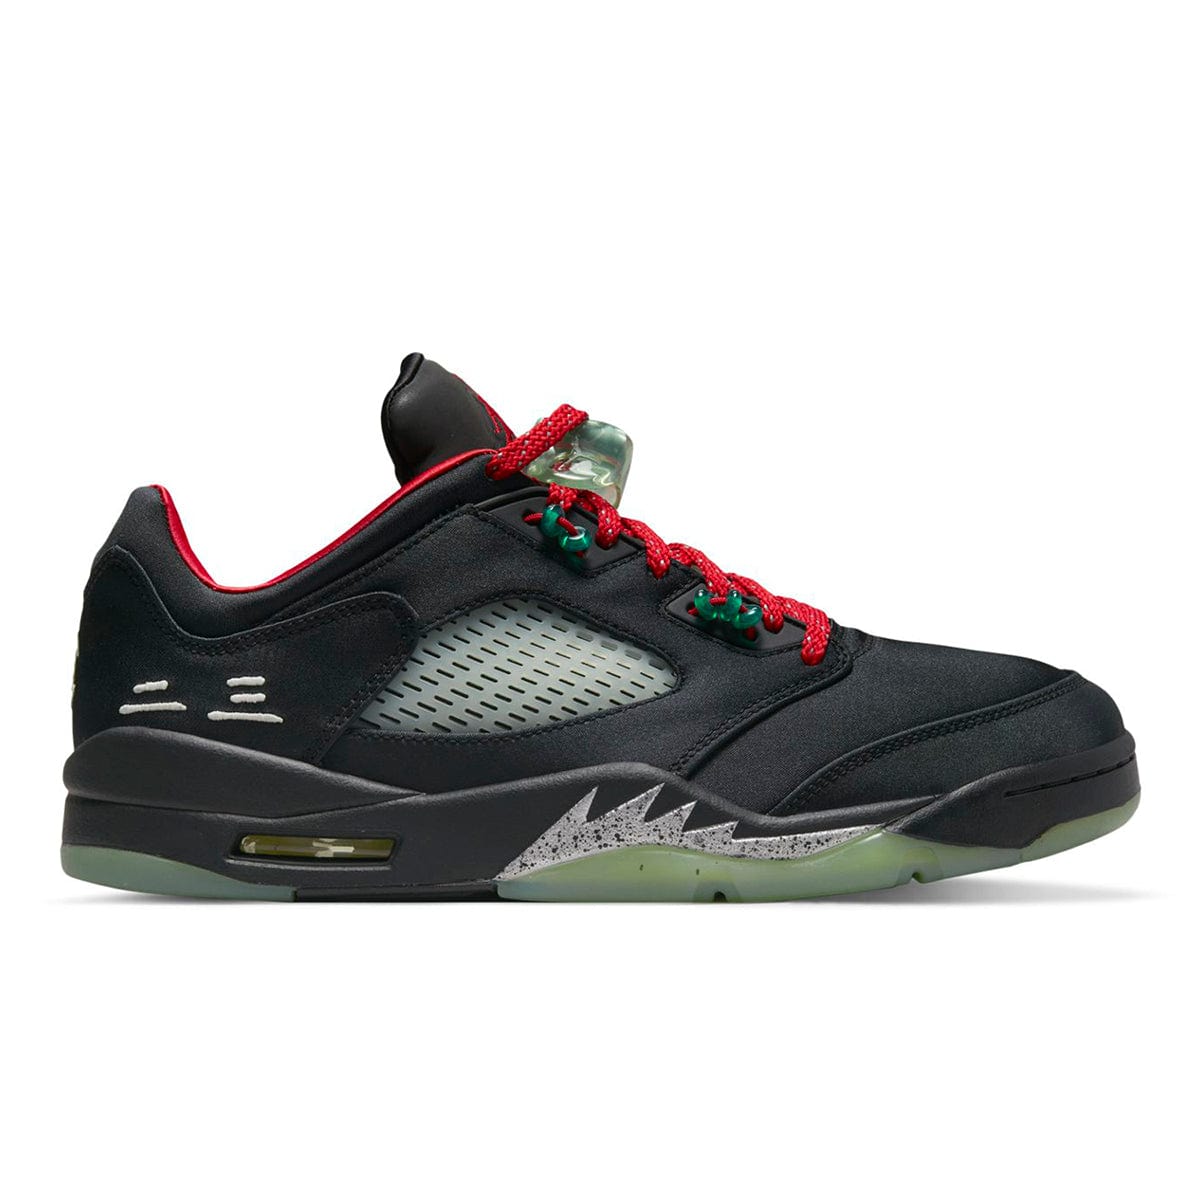 Air Jordan Sneakers X CLOT AIR JORDAN 5 RETRO LOW SP